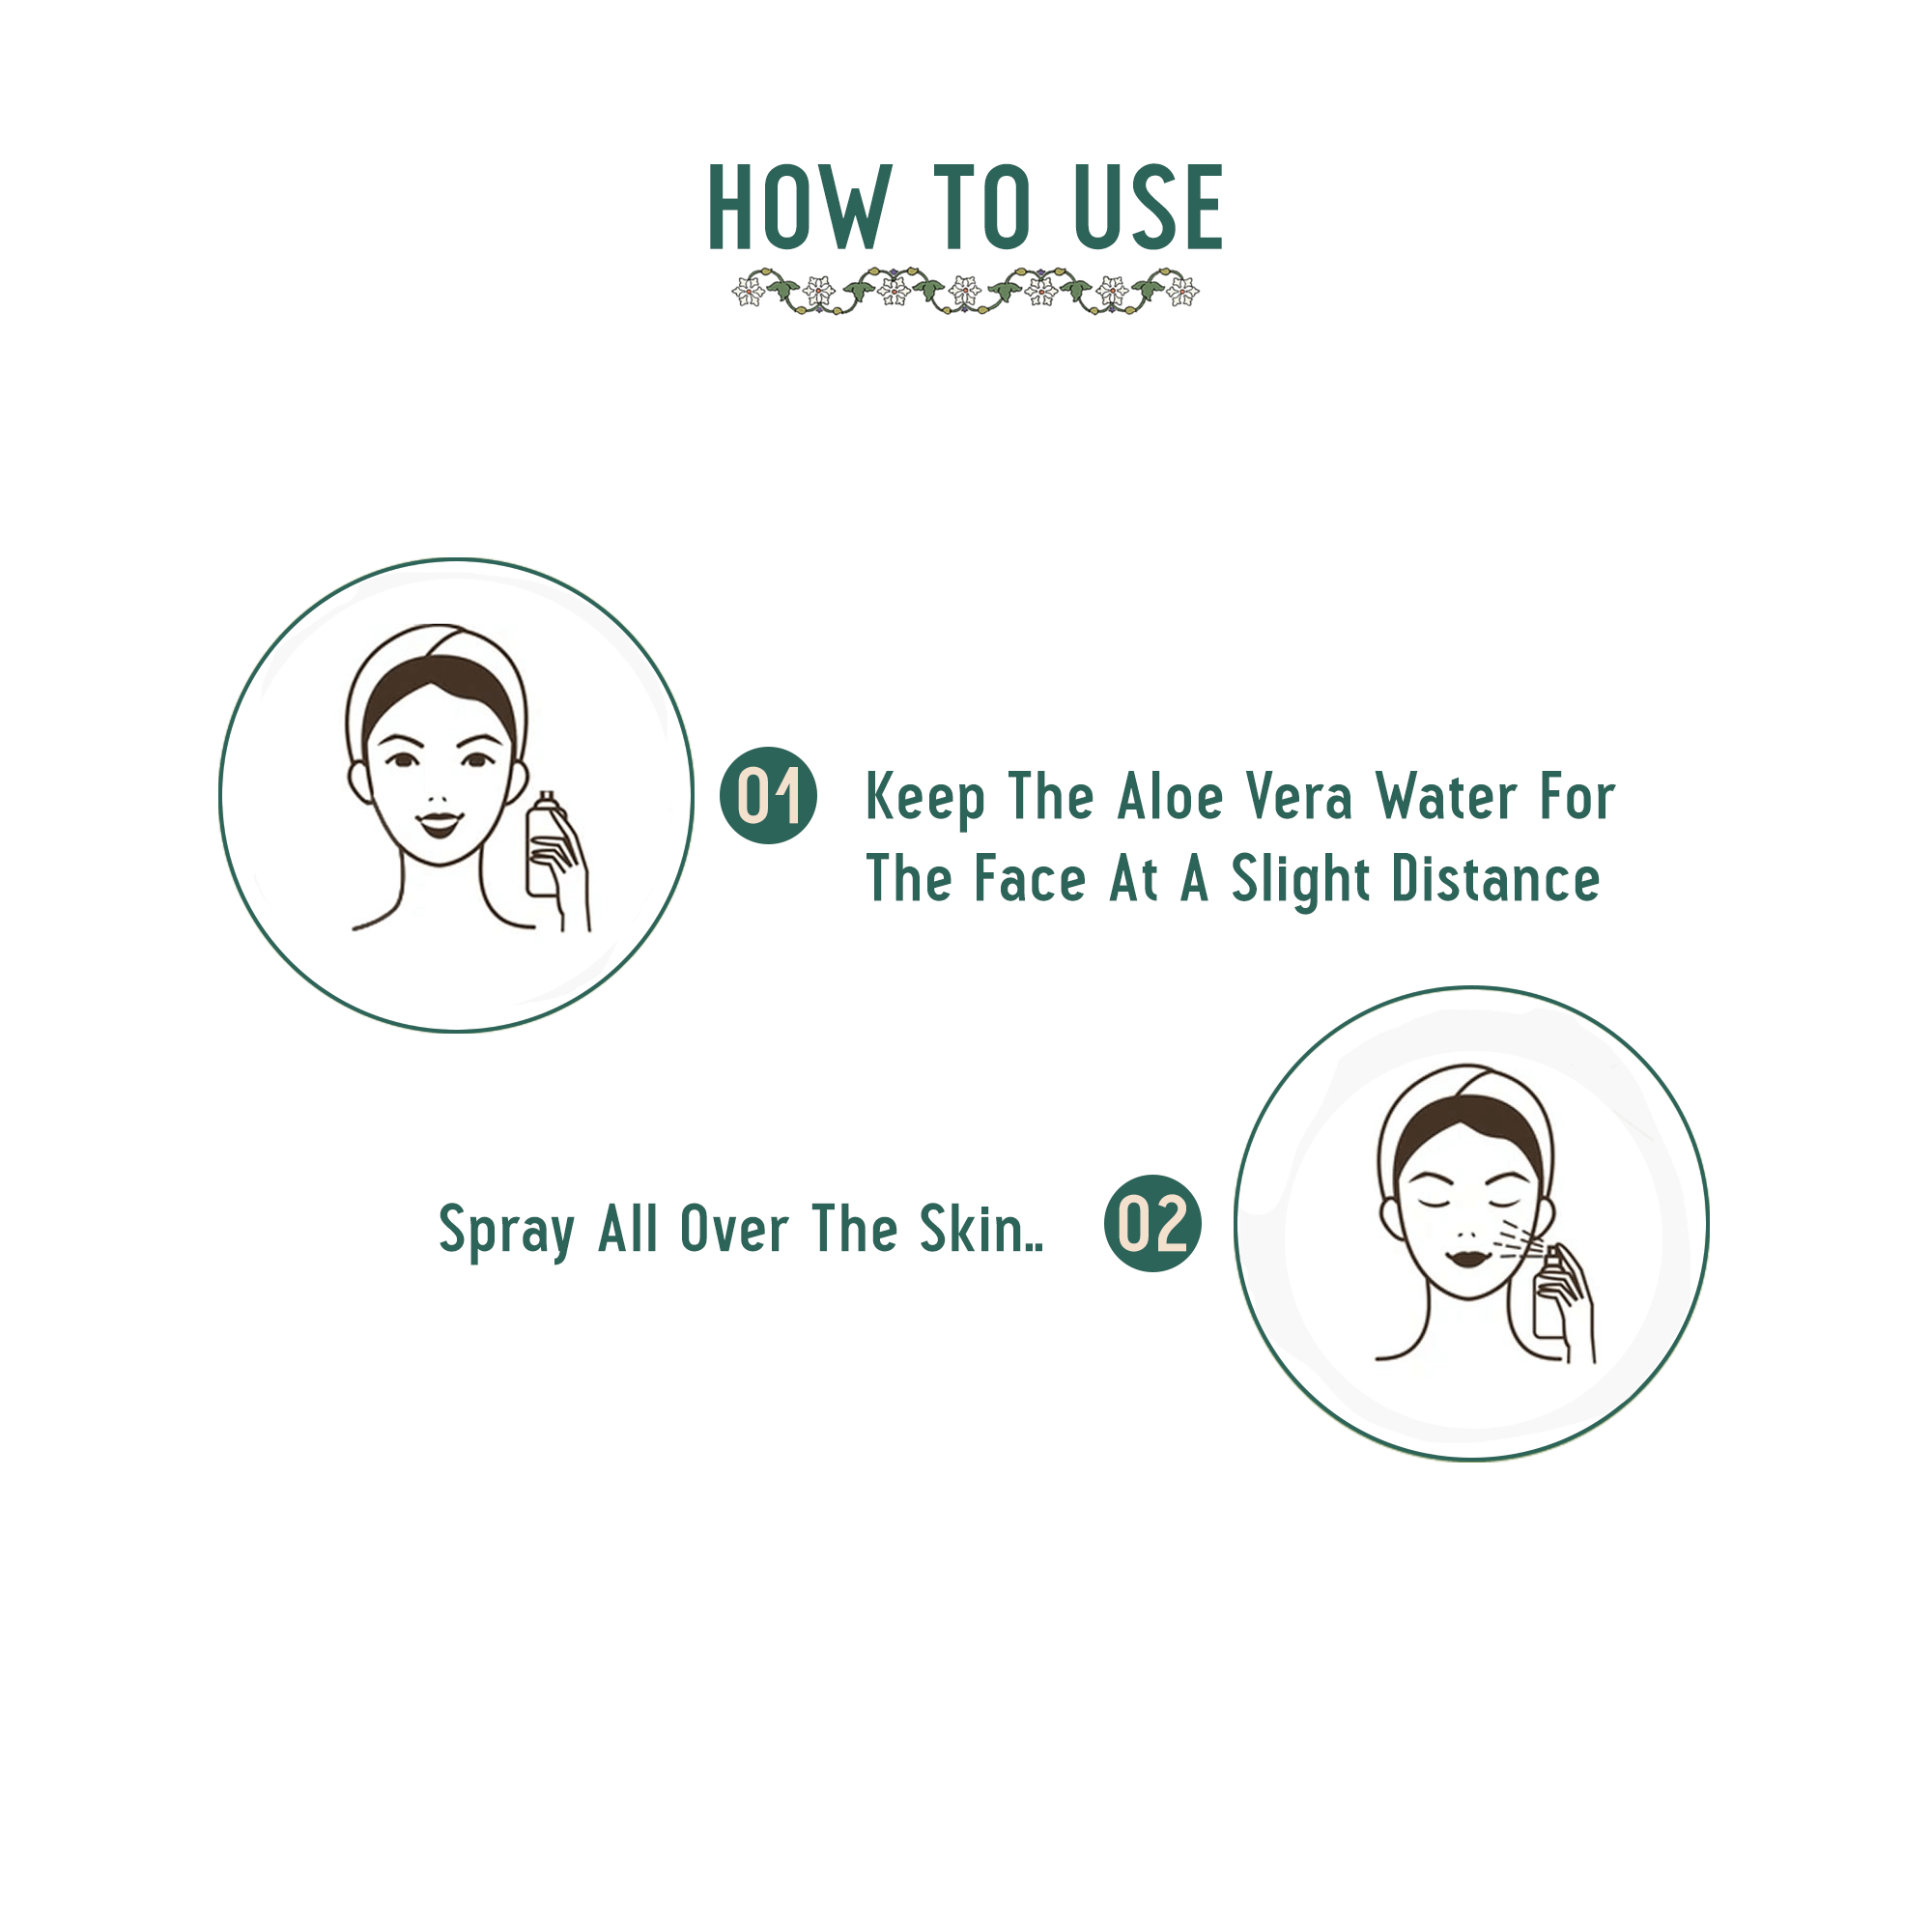 How to use : Aloe vera water